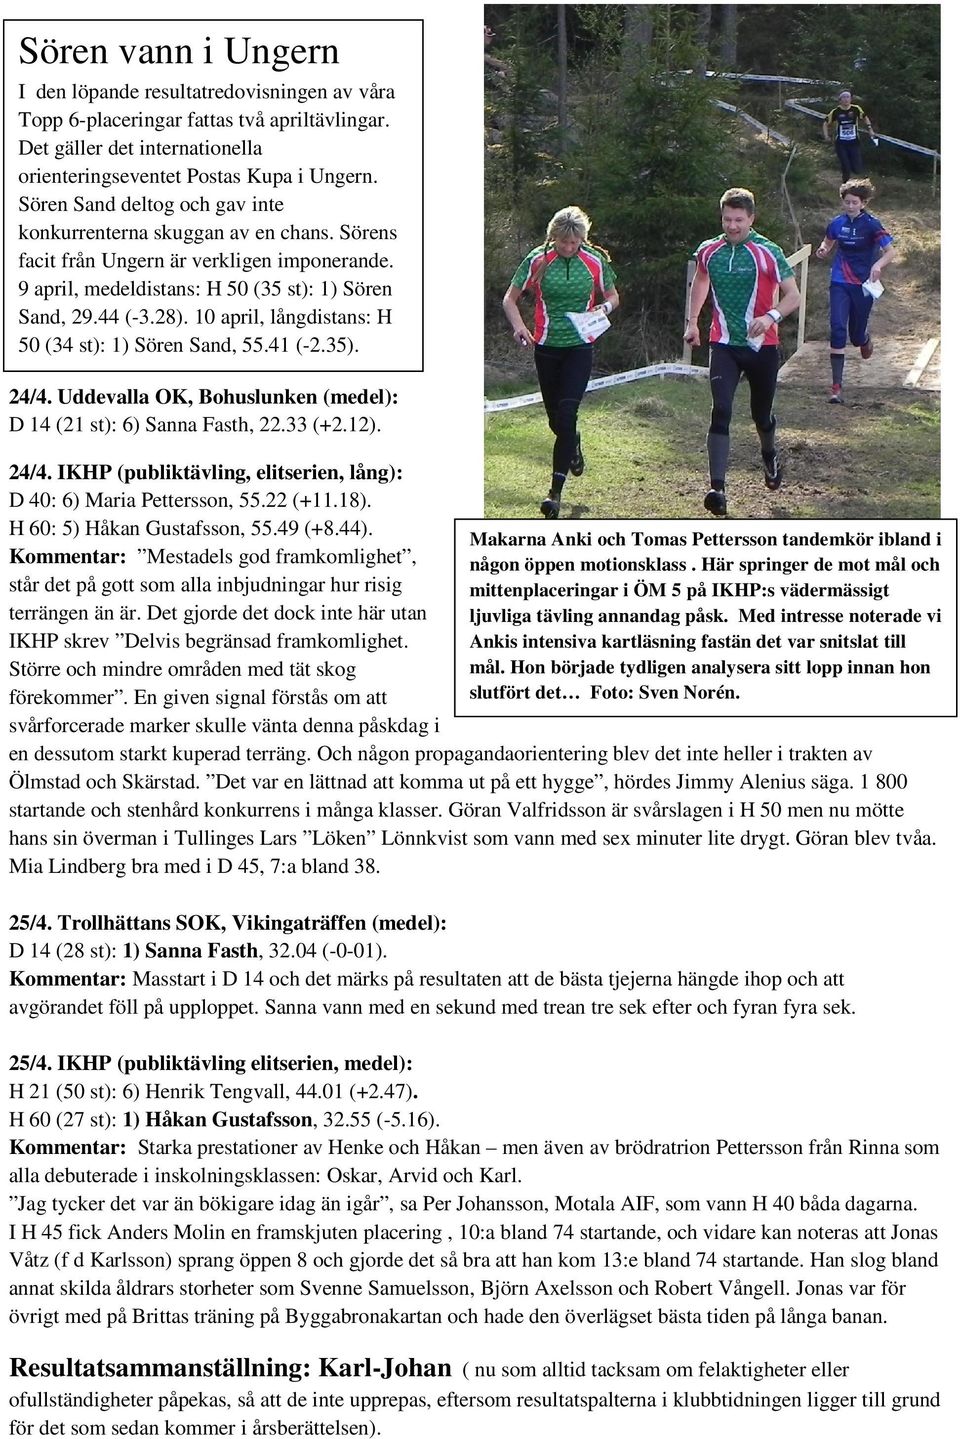 10 april, långdistans: H 50 (34 st): 1) Sören Sand, 55.41 (-2.35). 24/4. Uddevalla OK, Bohuslunken (medel): D 14 (21 st): 6) Sanna Fasth, 22.33 (+2.12). 24/4. IKHP (publiktävling, elitserien, lång): D 40: 6) Maria Pettersson, 55.